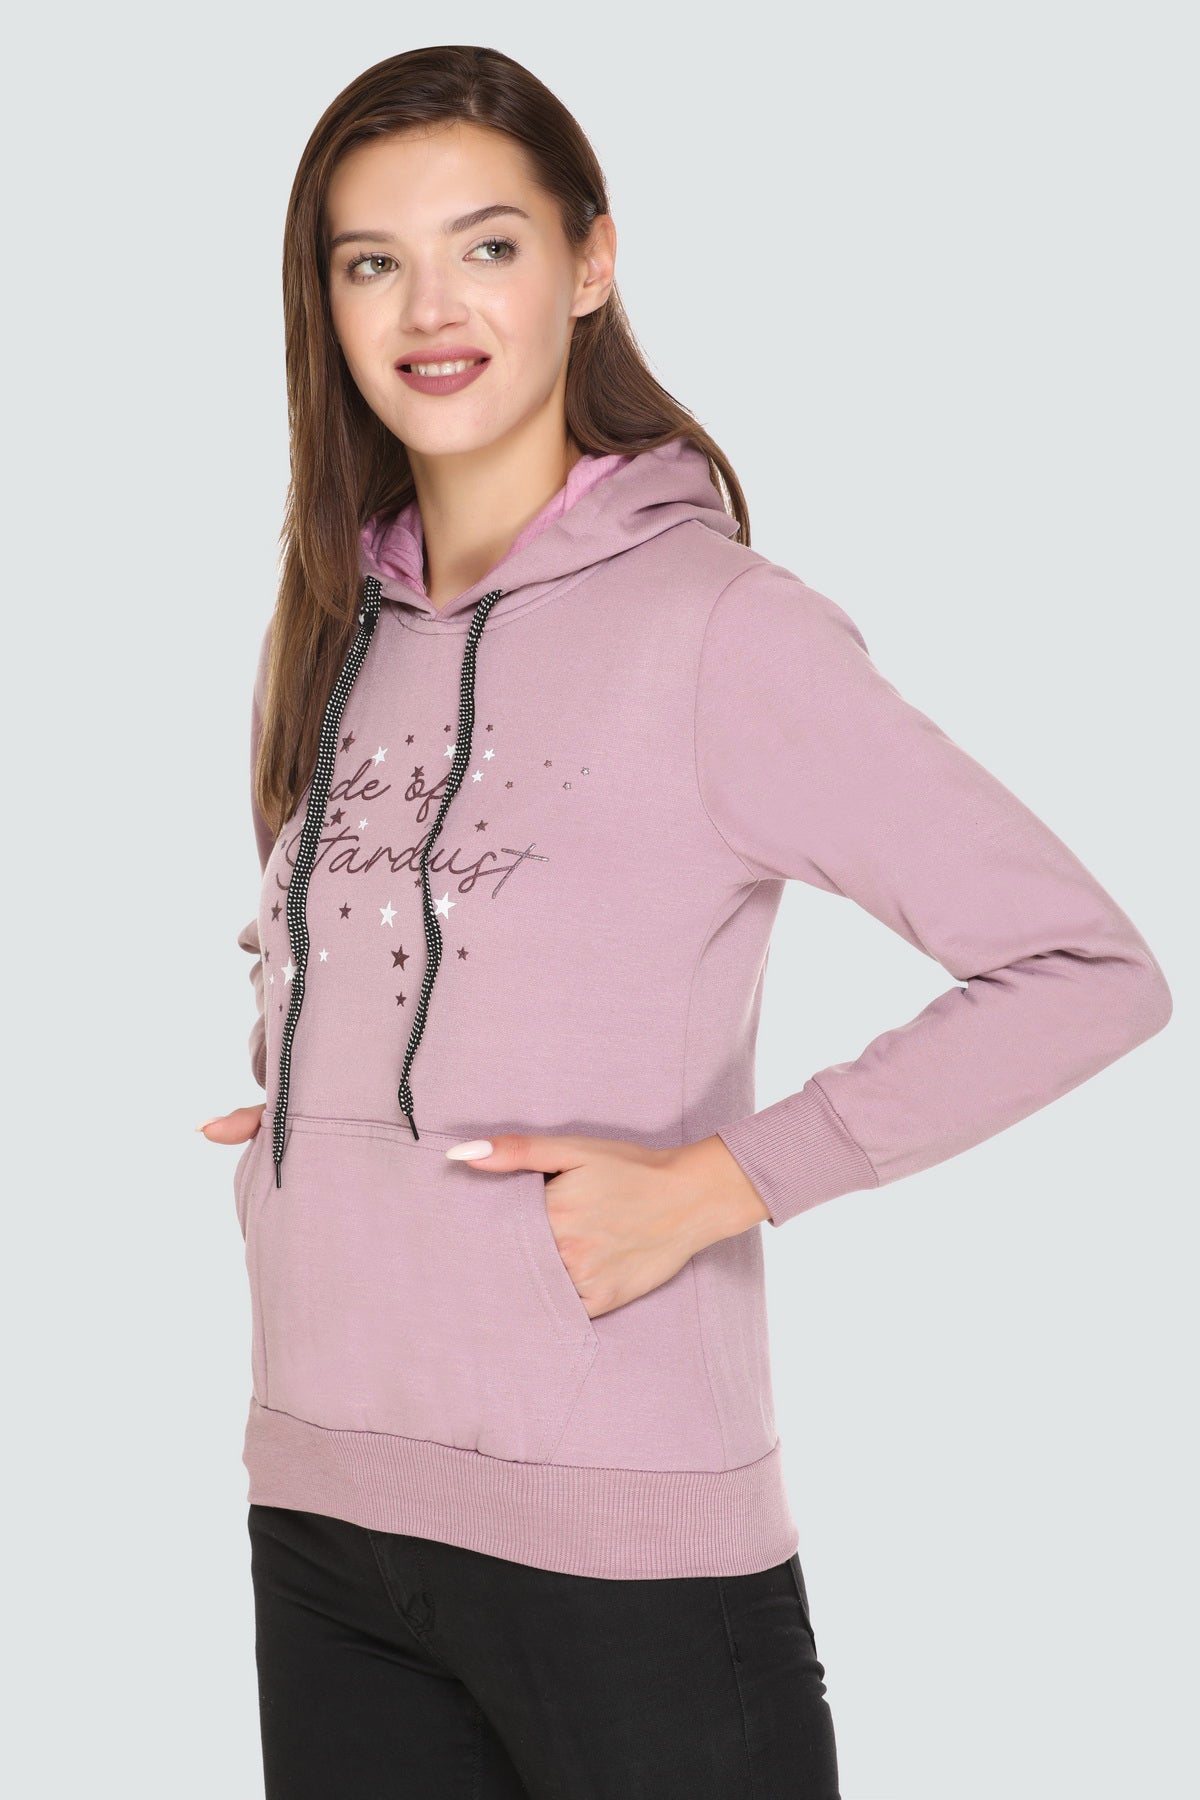 White Moon Hoodie Printed Casual/Sports Sweatshirt for women (Lavender) whitemoon.in